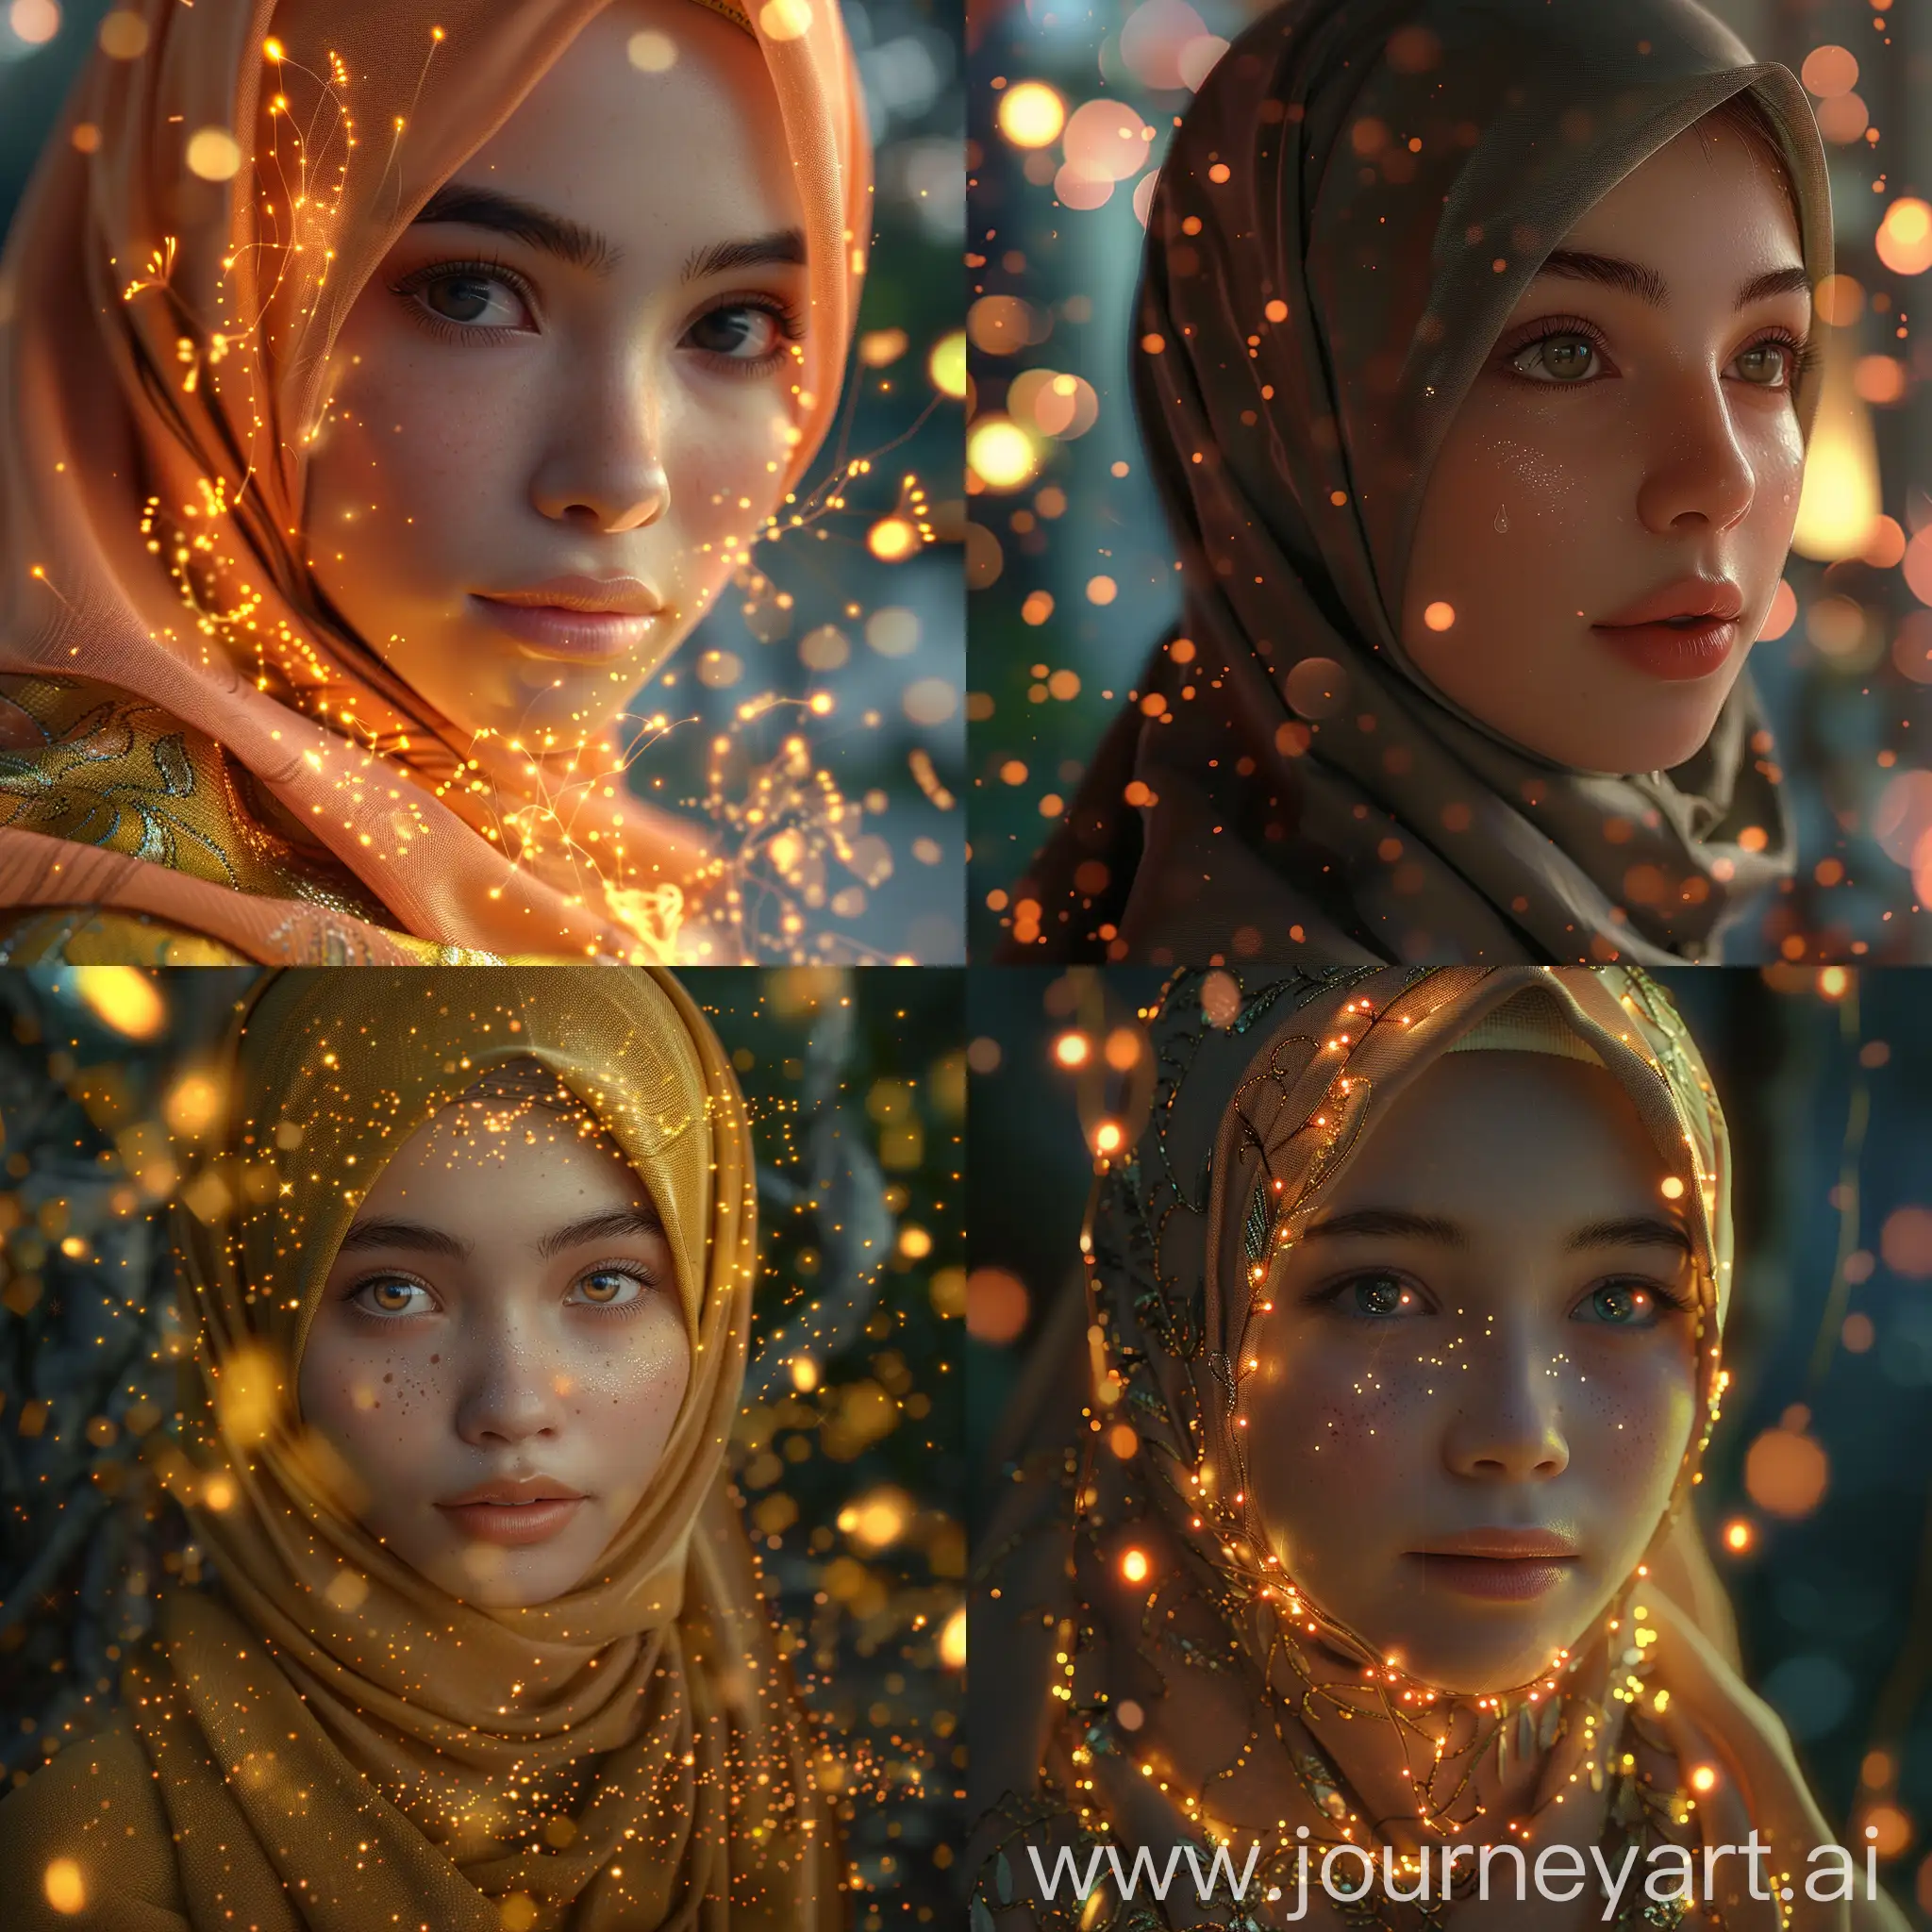 Indonesian-Beauty-Hijab-Girl-in-UltraRealistic-HighResolution-Art